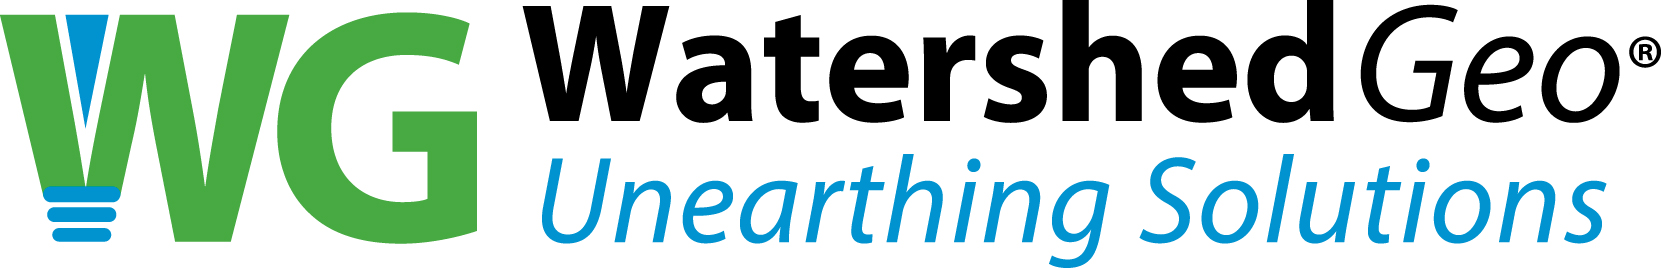 Logo : WatershedGeo